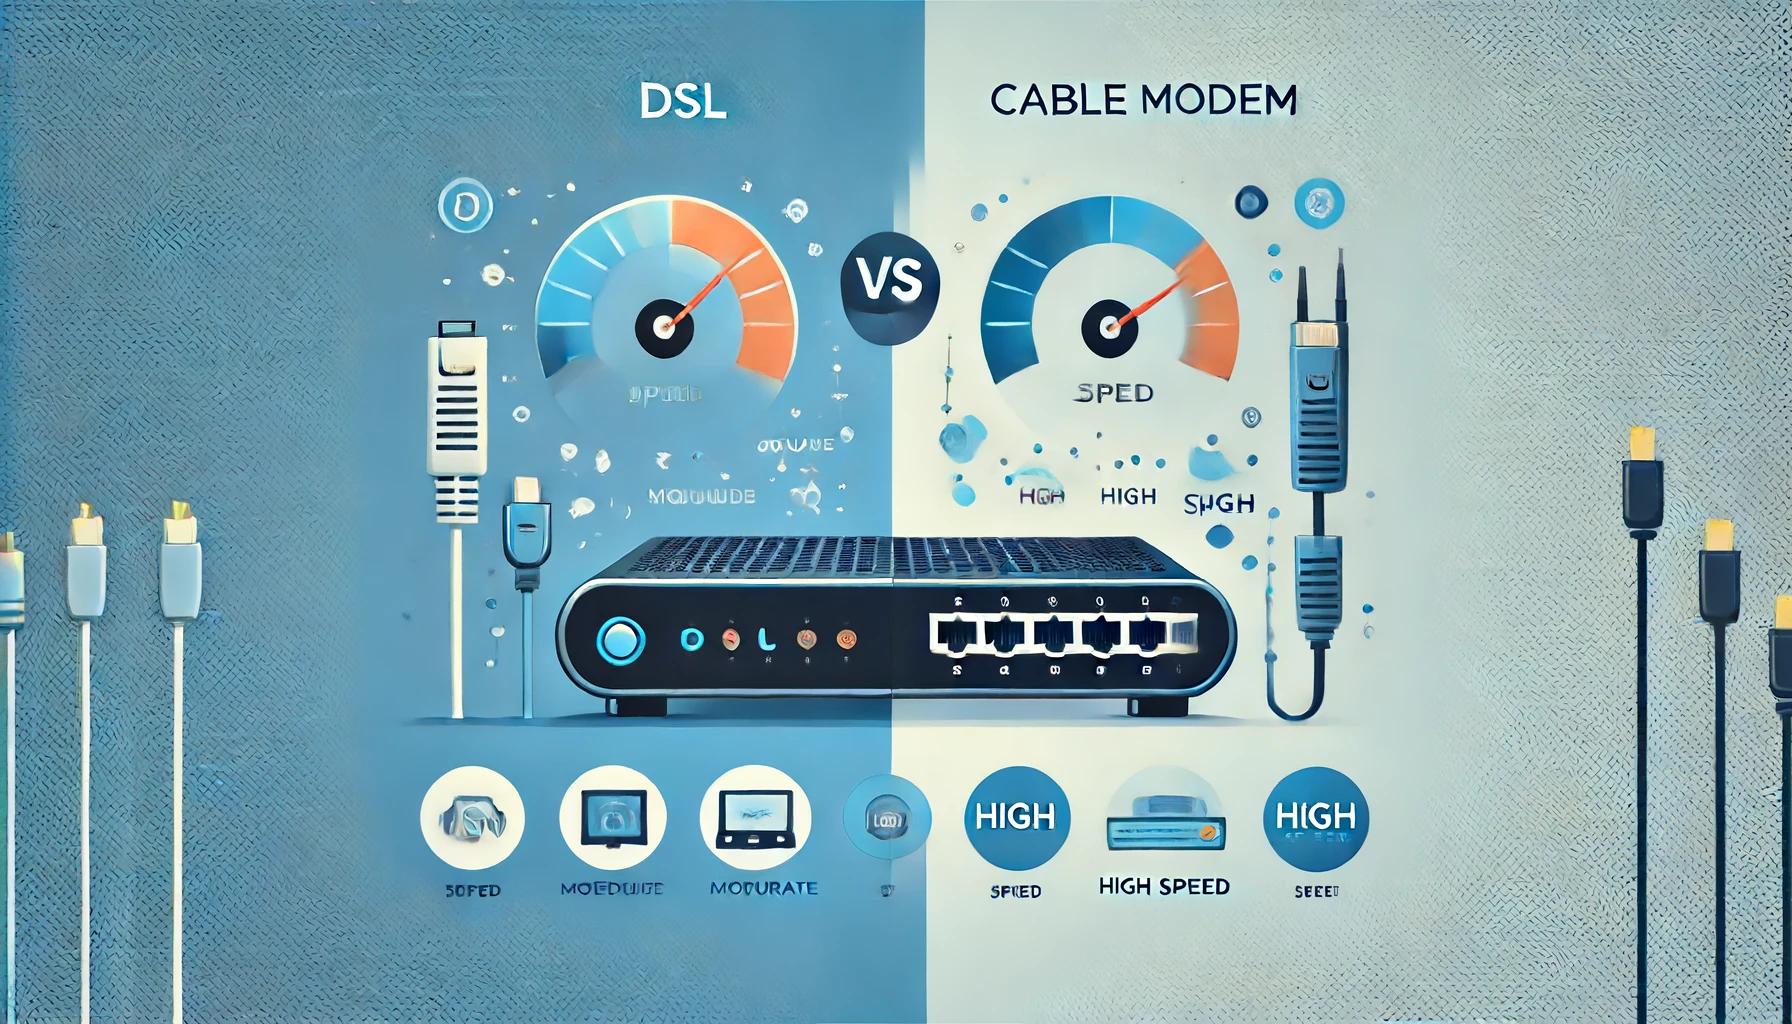 DSL vs Cable Modem: A Comparison of Broadband Technologies